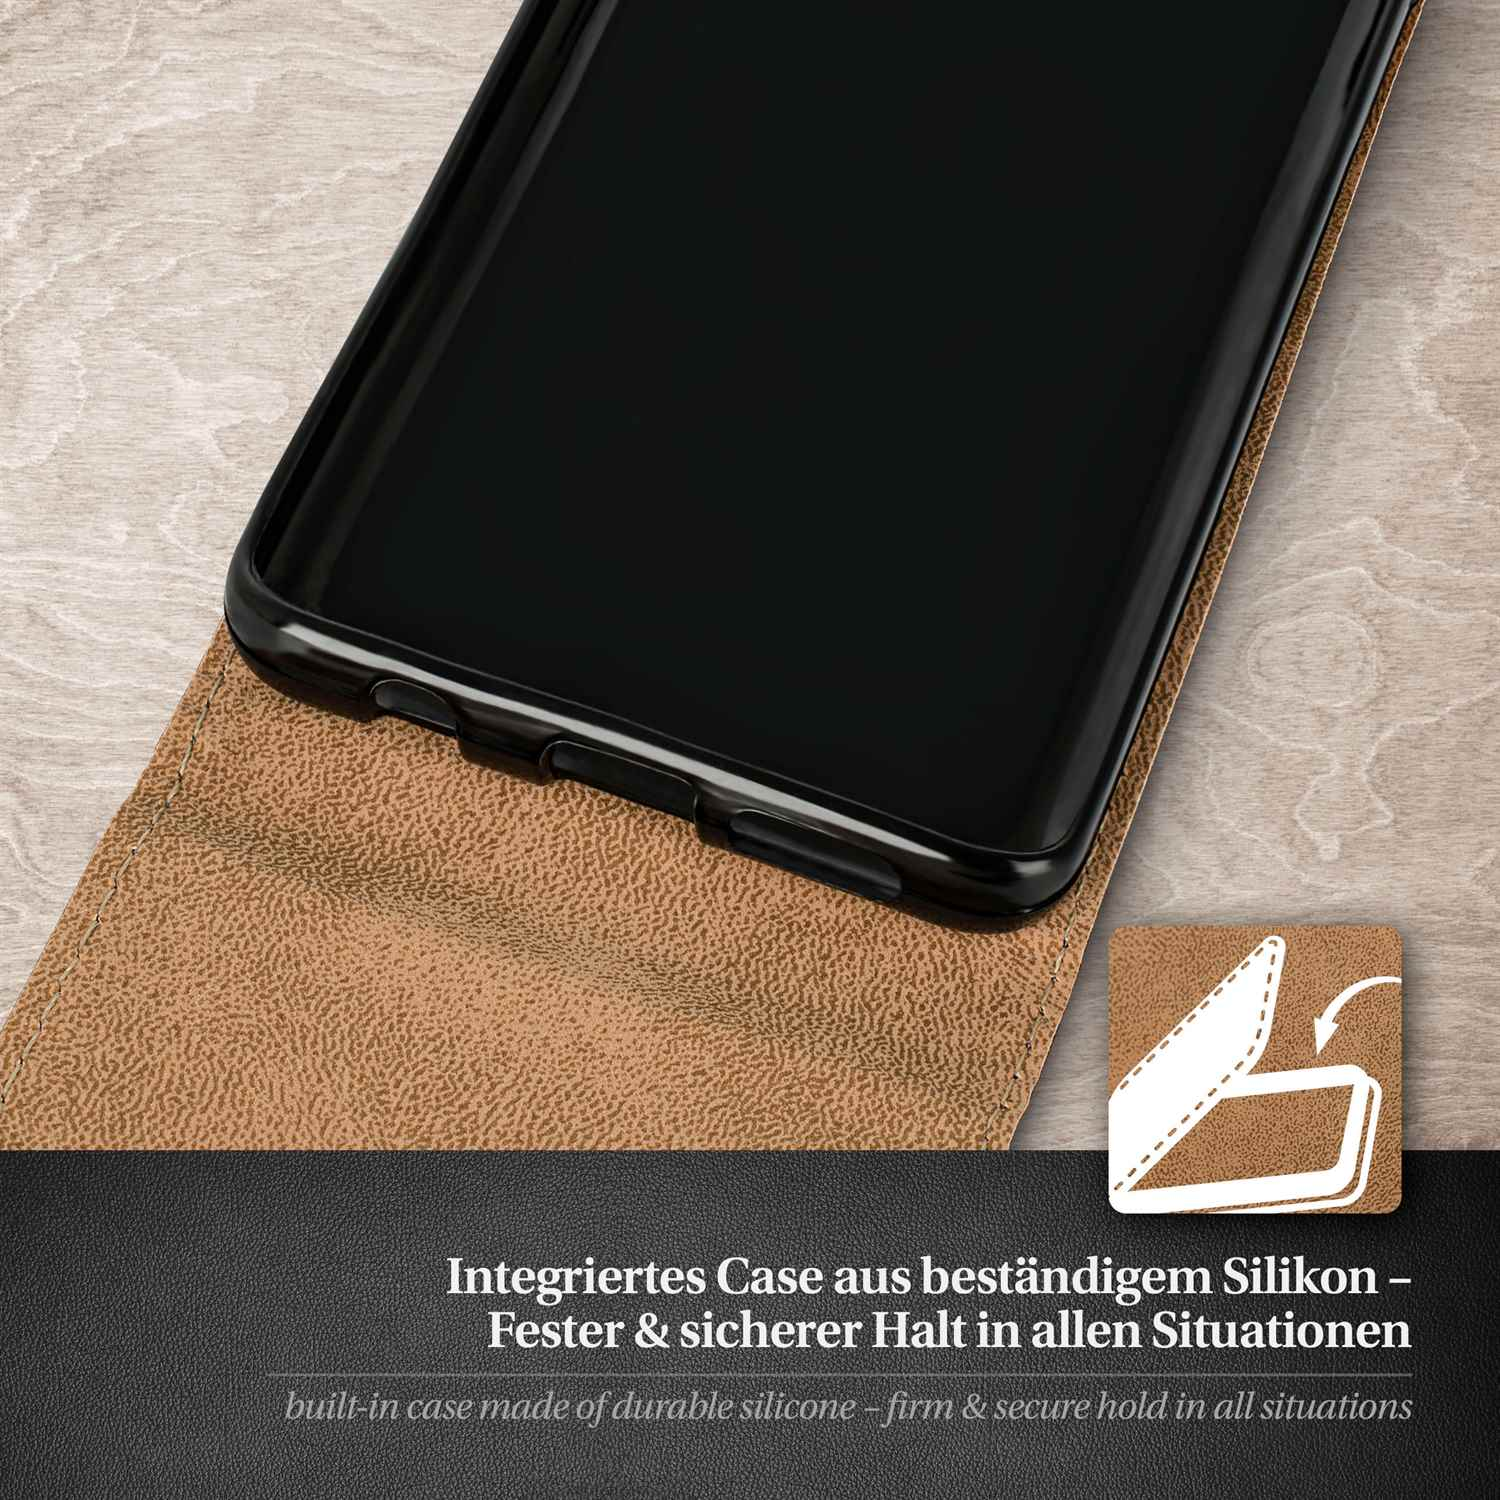 S5 Pearl-White Case, Cover, Galaxy Flip Samsung, MOEX Flip Mini,